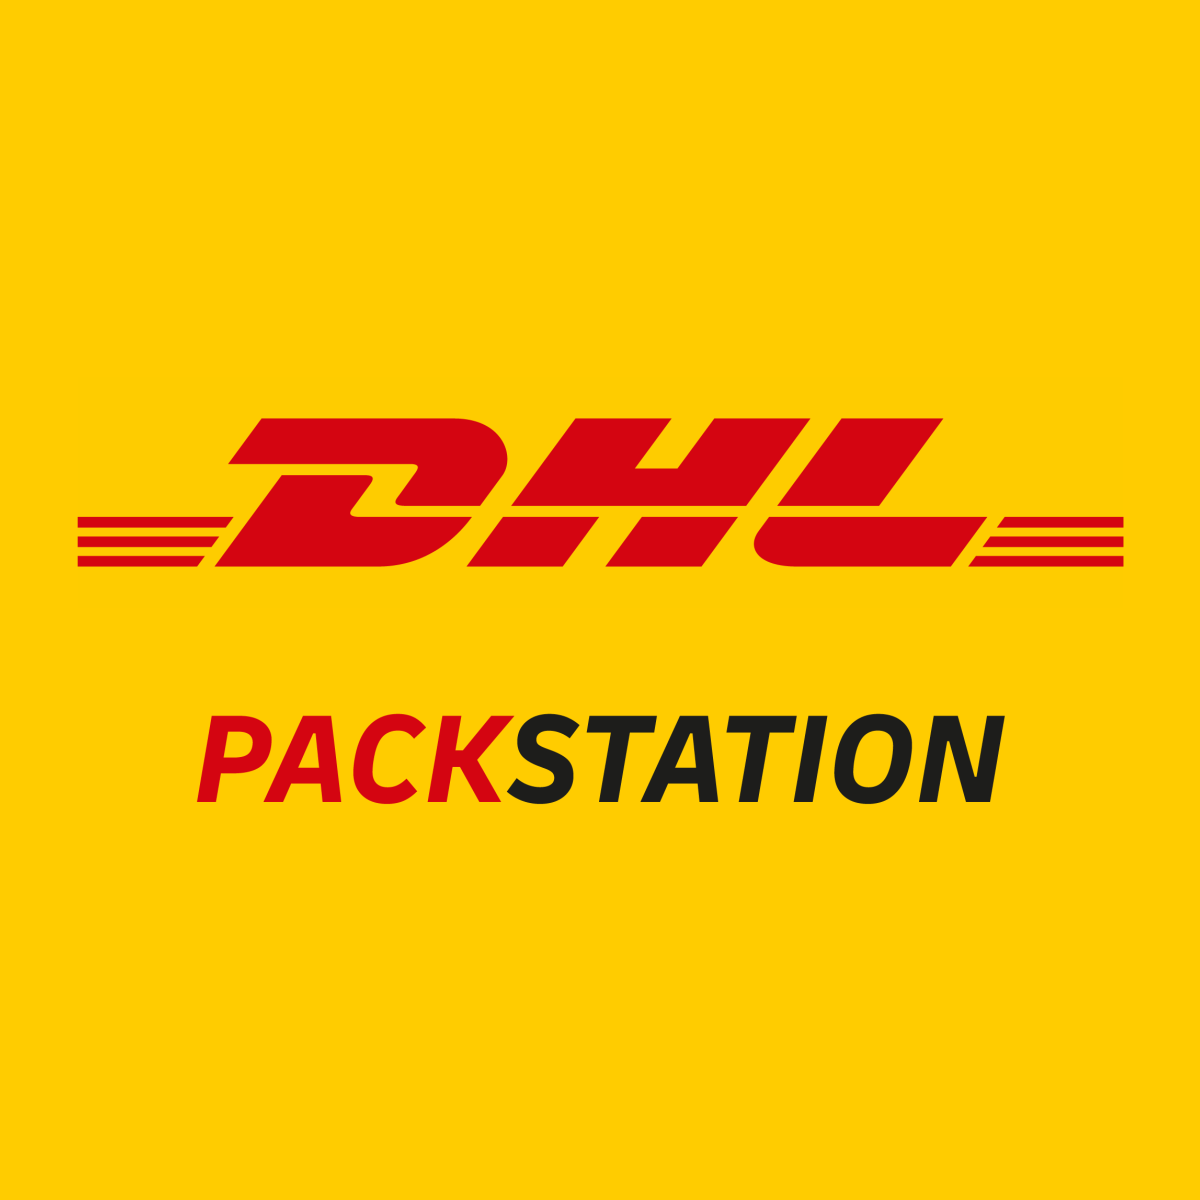 DHL Packstation for Shopify